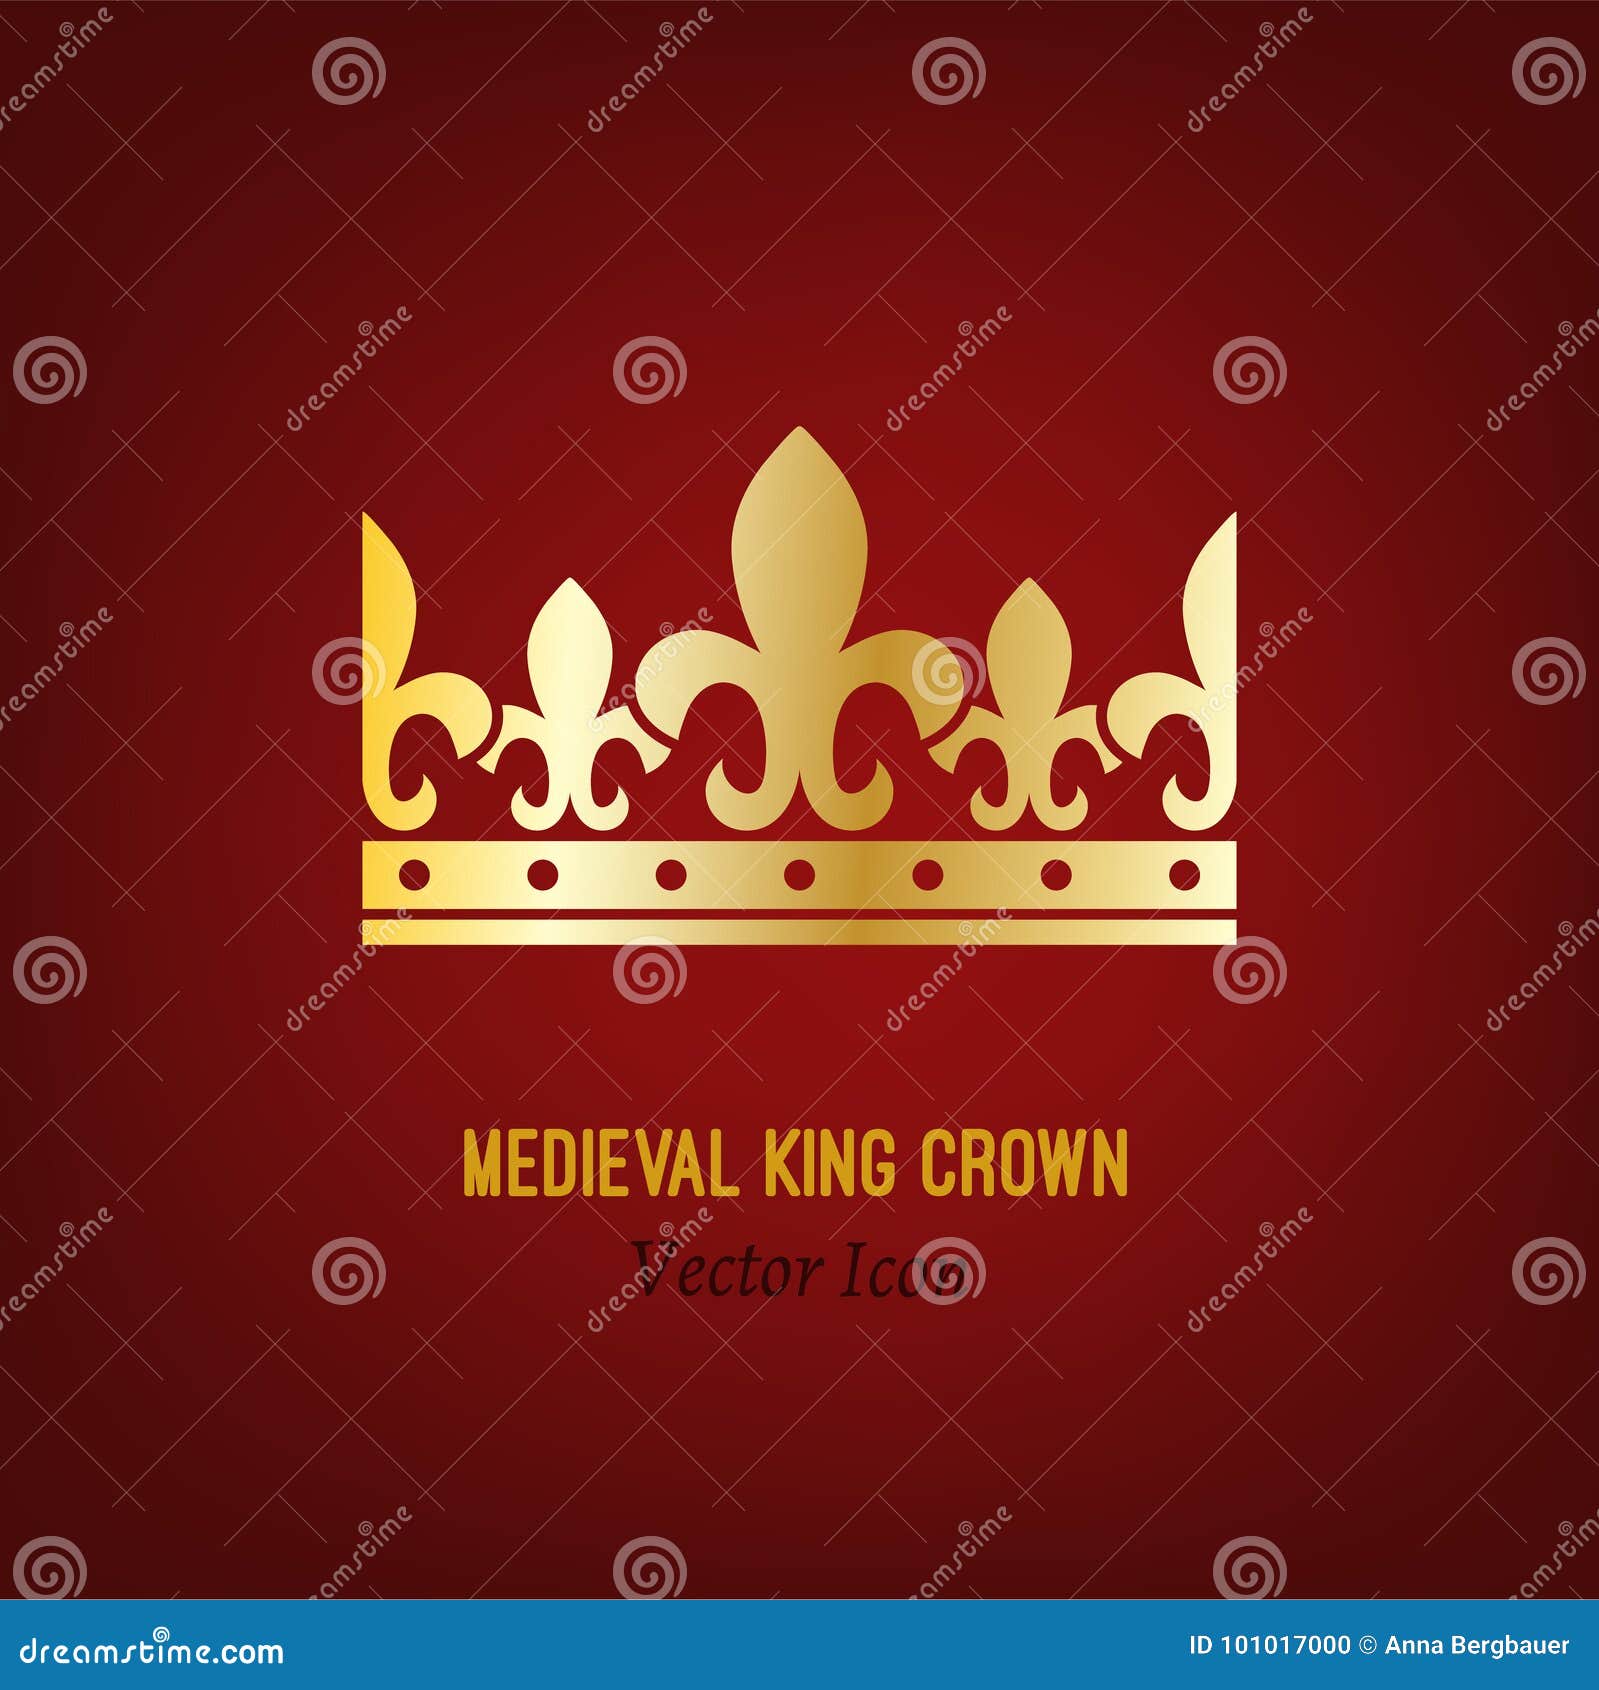 Medieval king crown stock vector. Illustration of element - 101017000